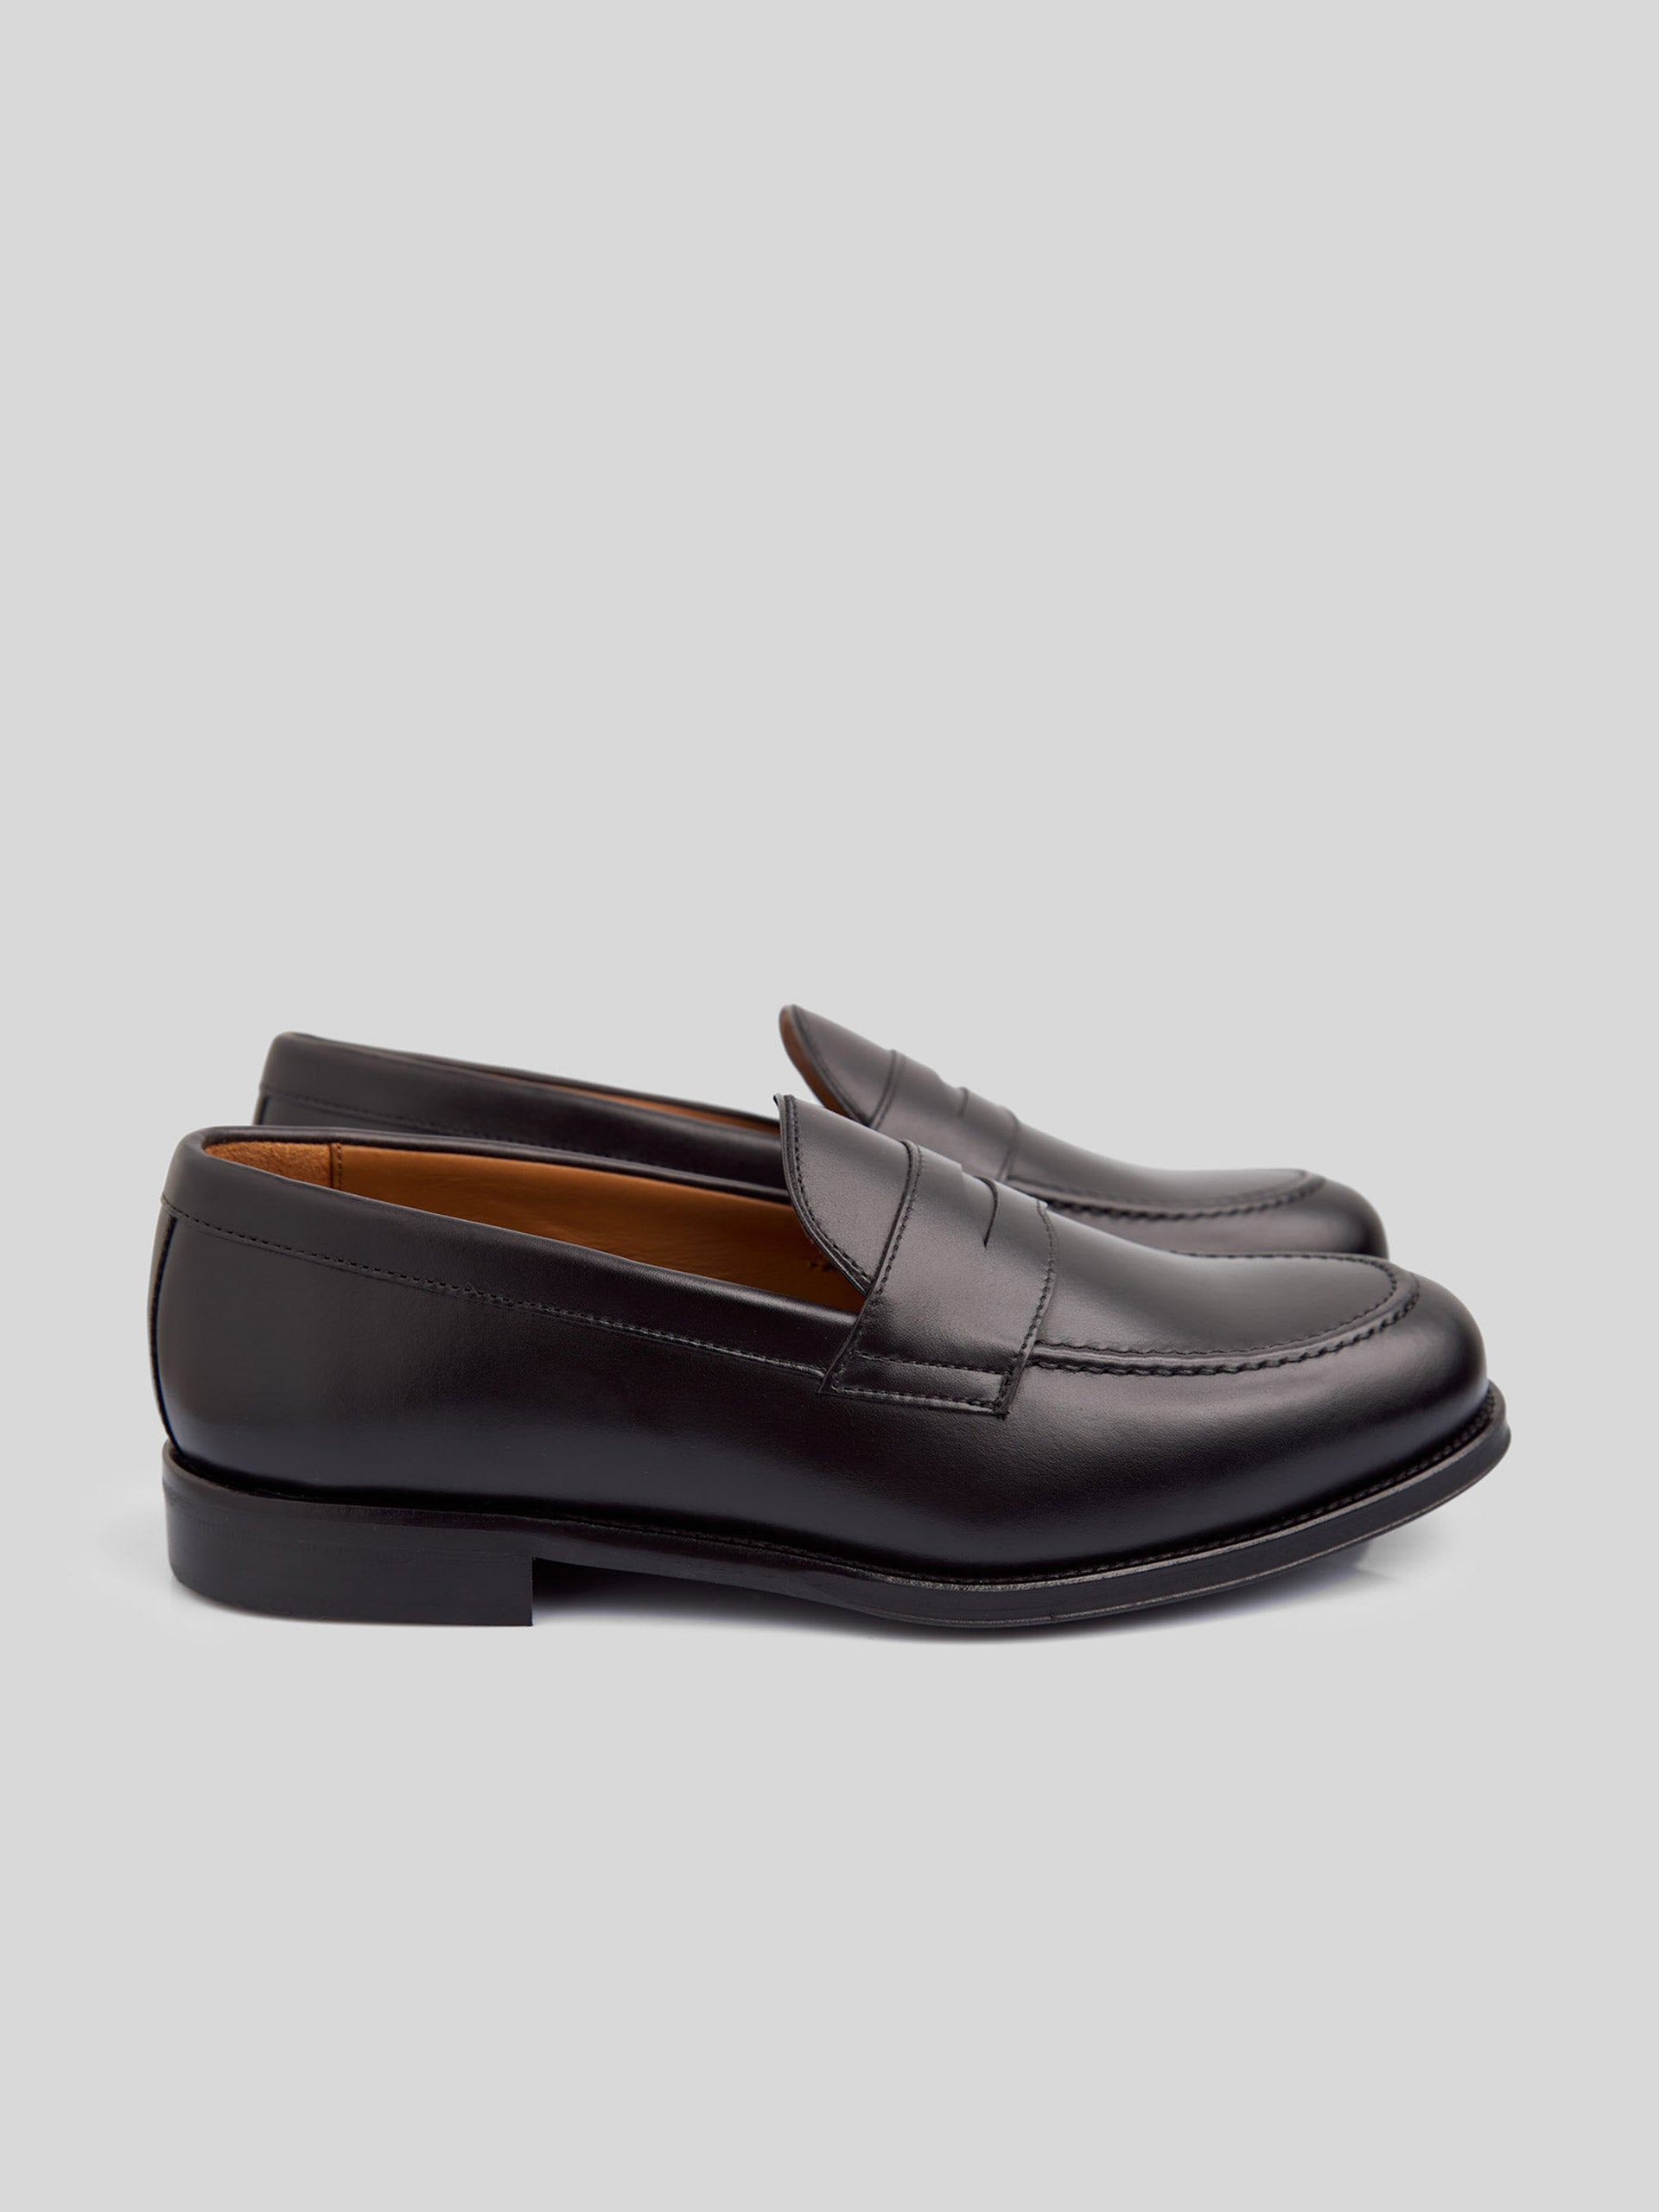 Black leather penny shoe